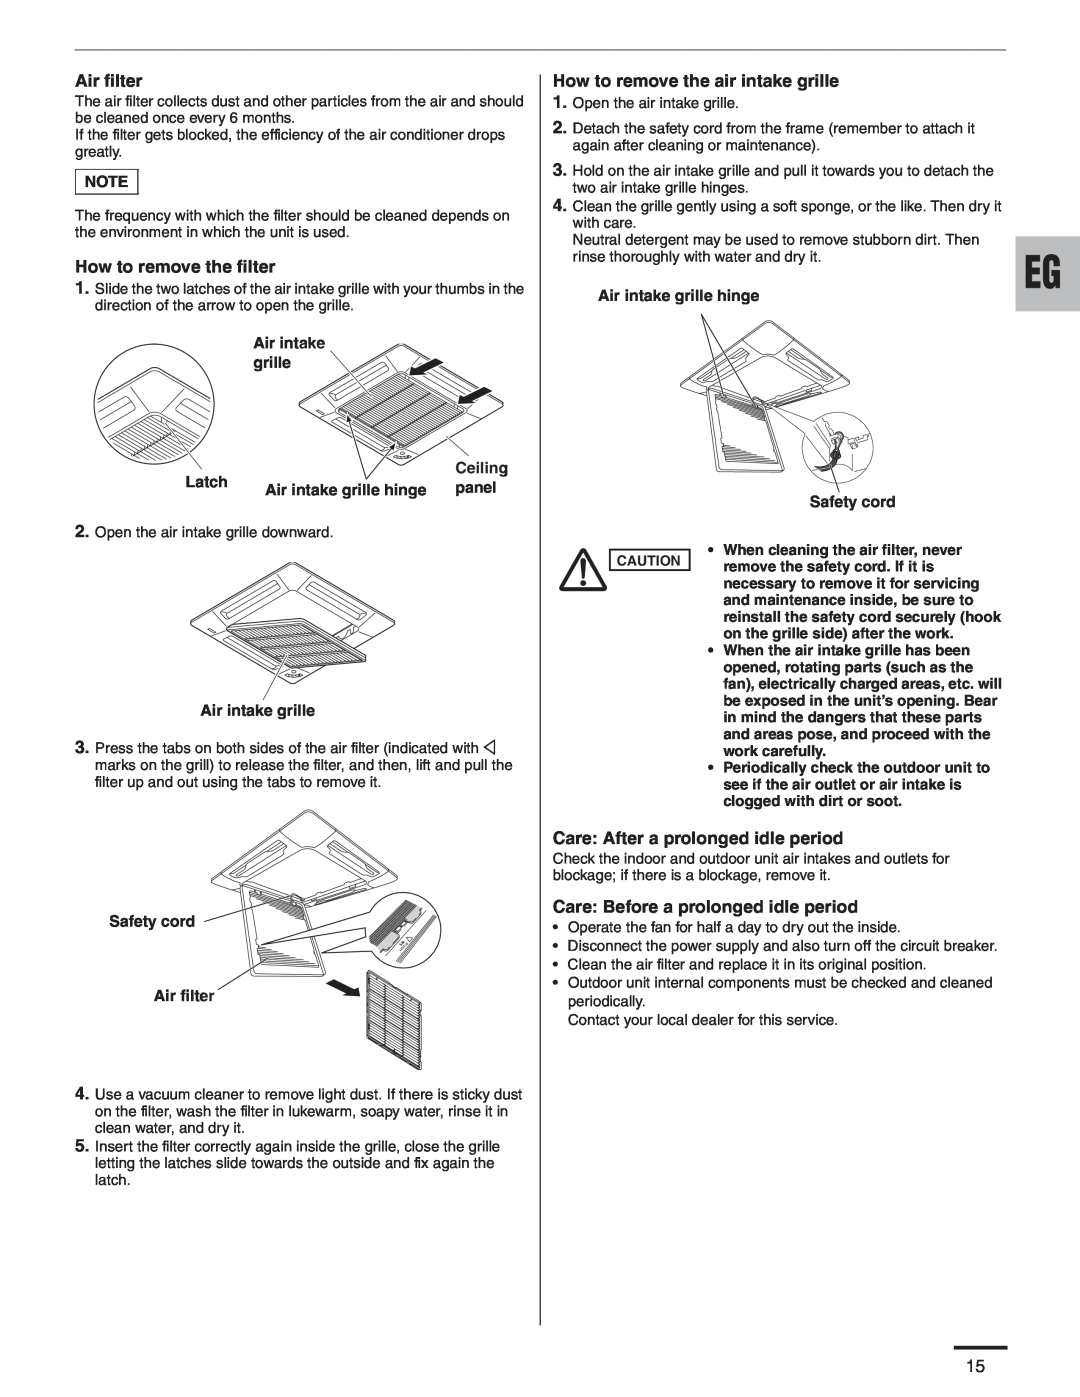 Panasonic CU-3KE19NBU Air filter, How to remove the filter, How to remove the air intake grille, Latch, Ceiling, panel 